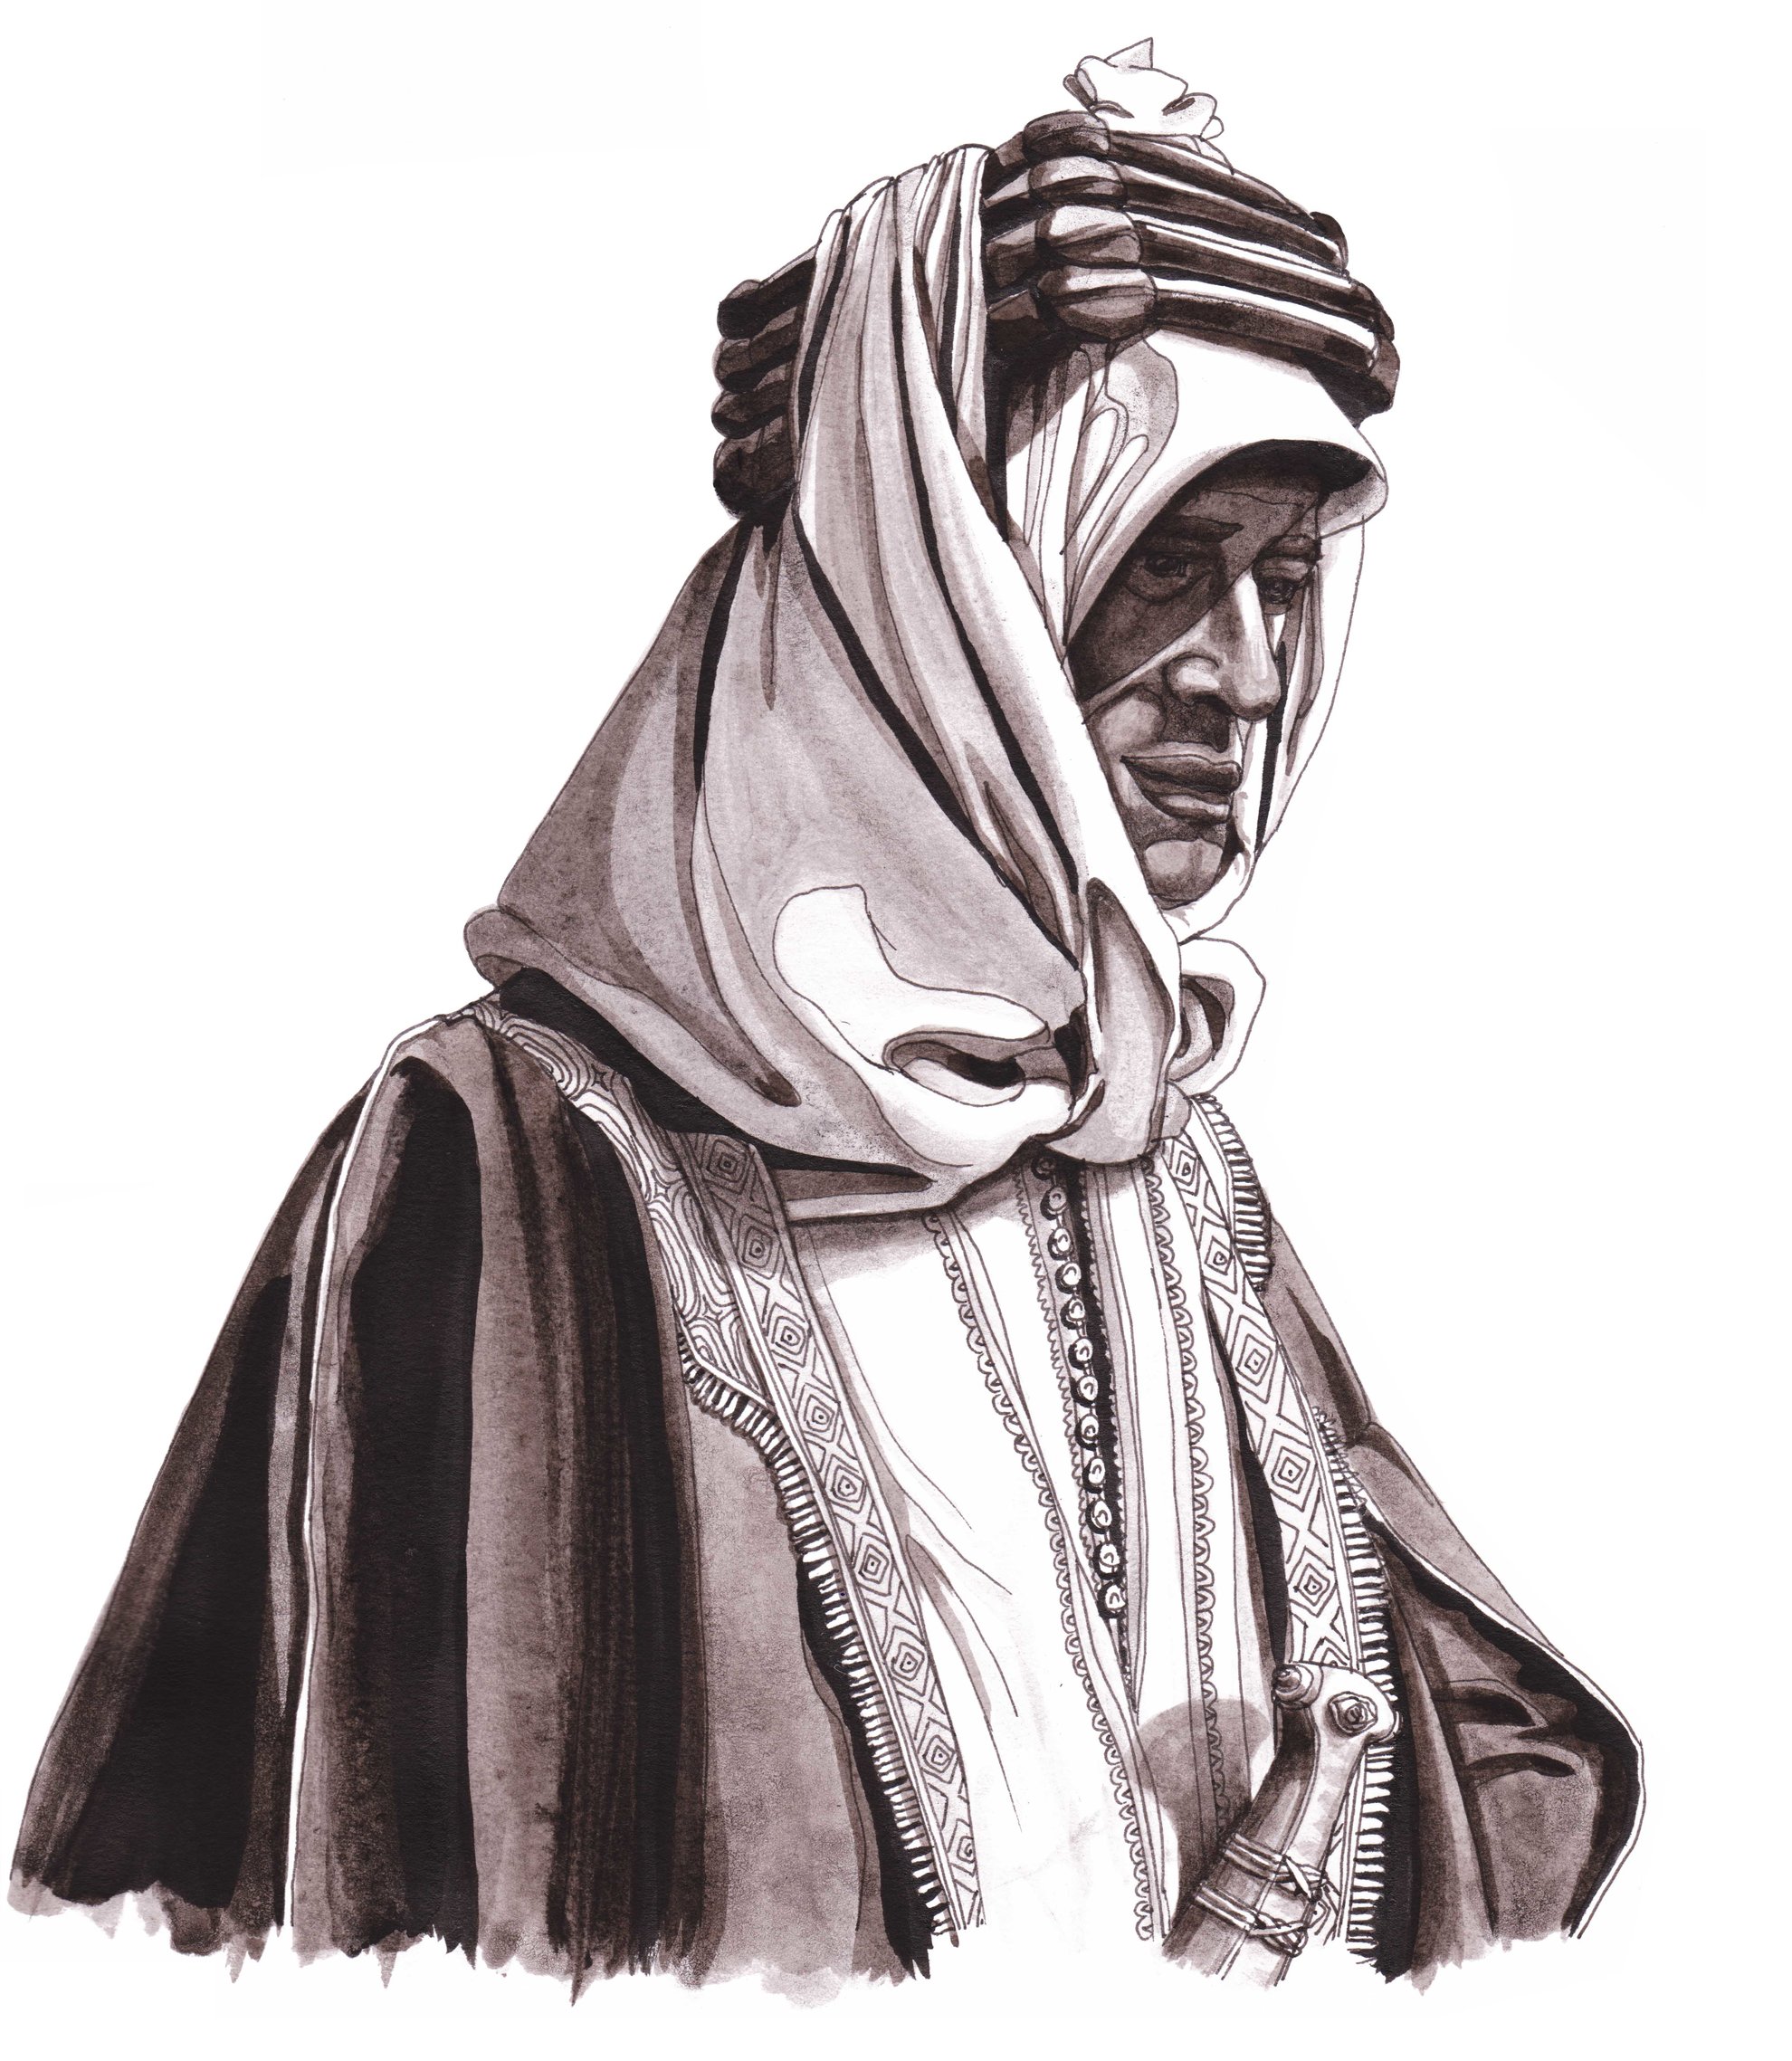 Lawrence of Arabia (Jordan, Photo art book)